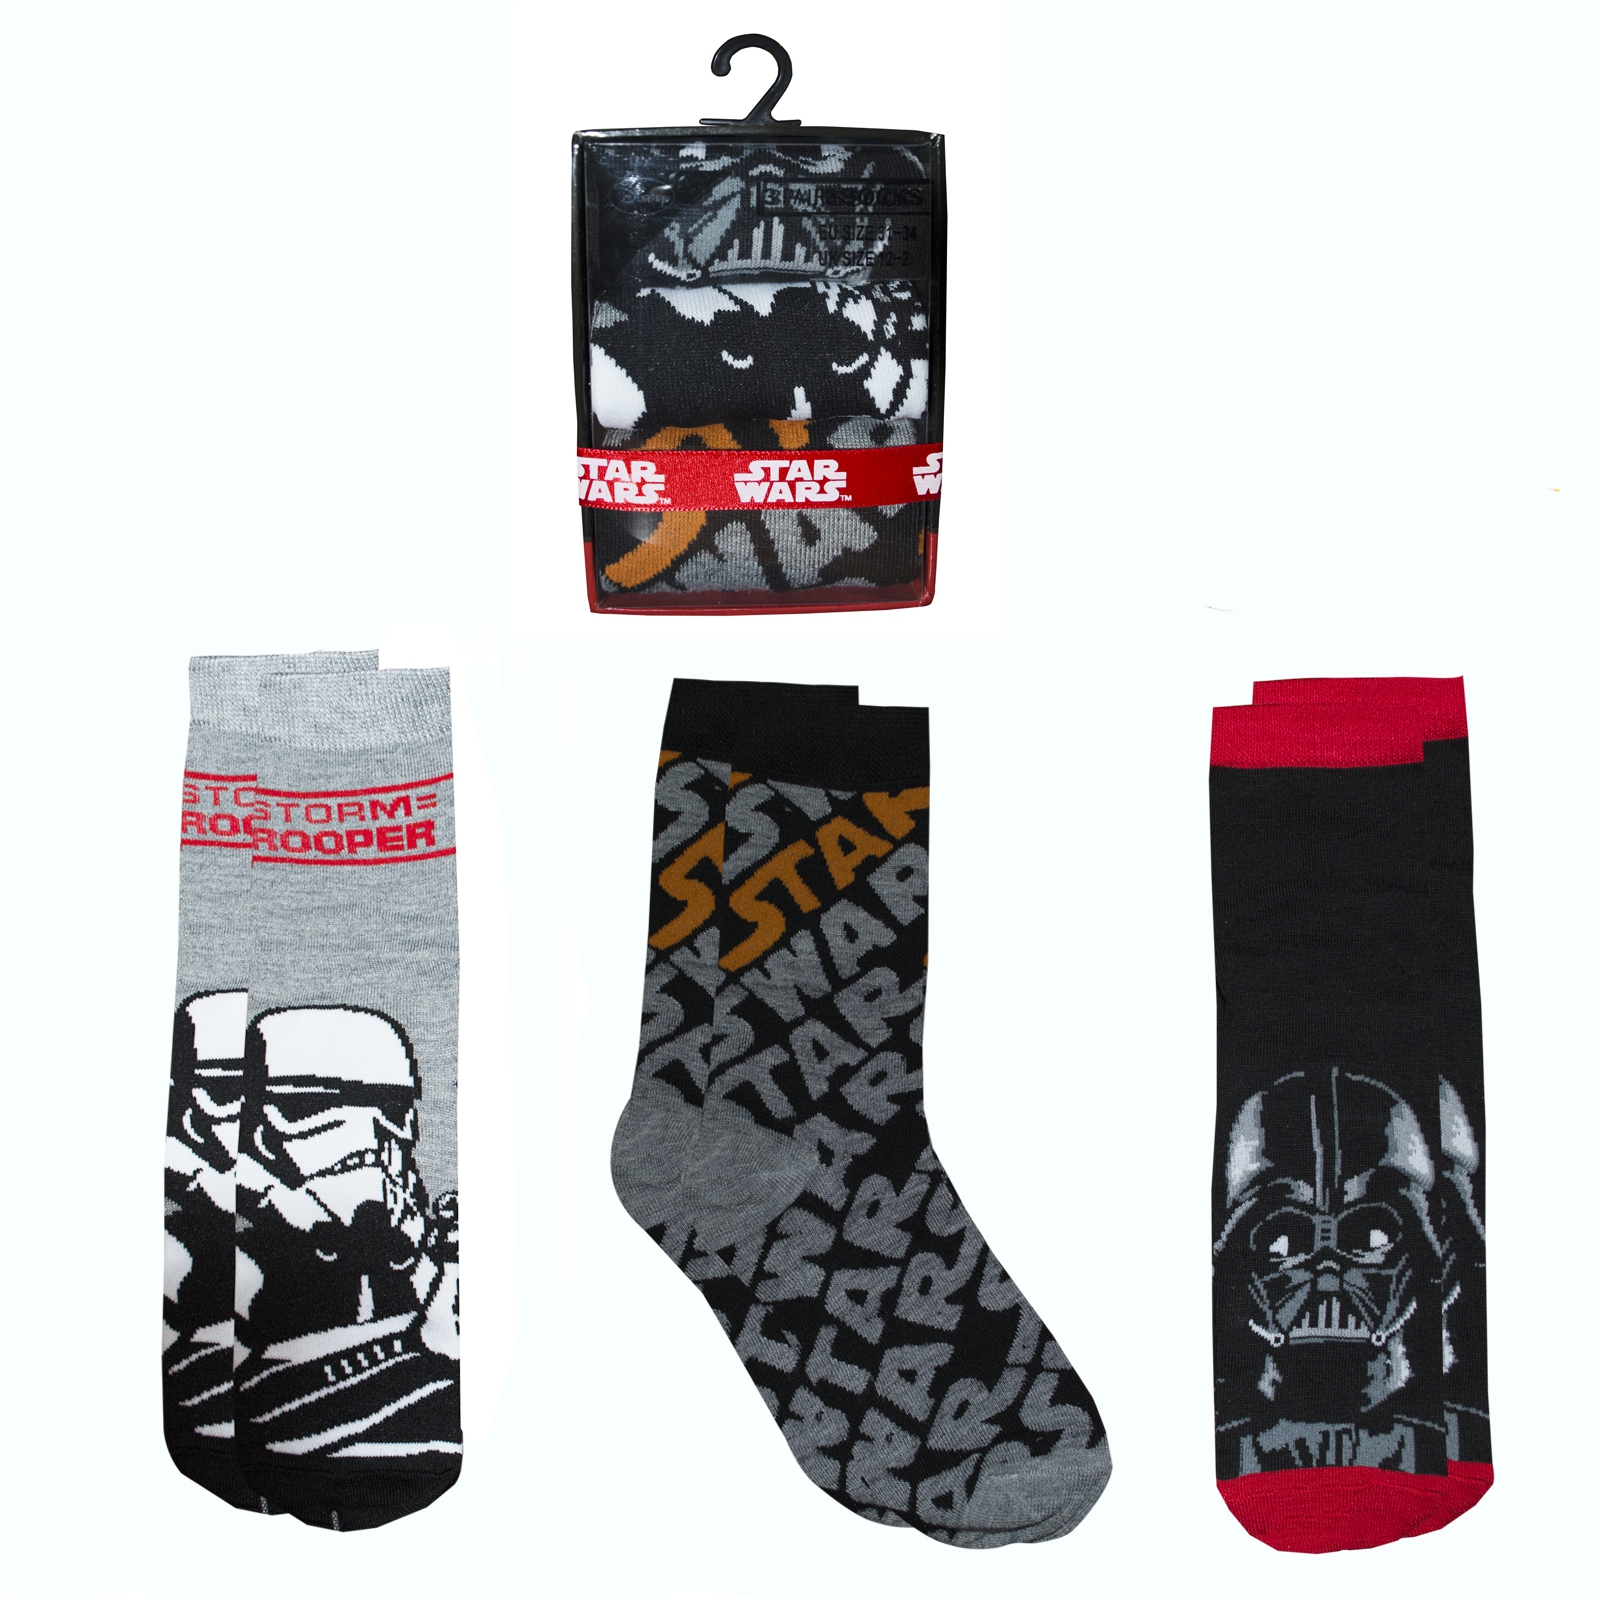 Disney Star Wars 3 Pk Socks 9-11 Size